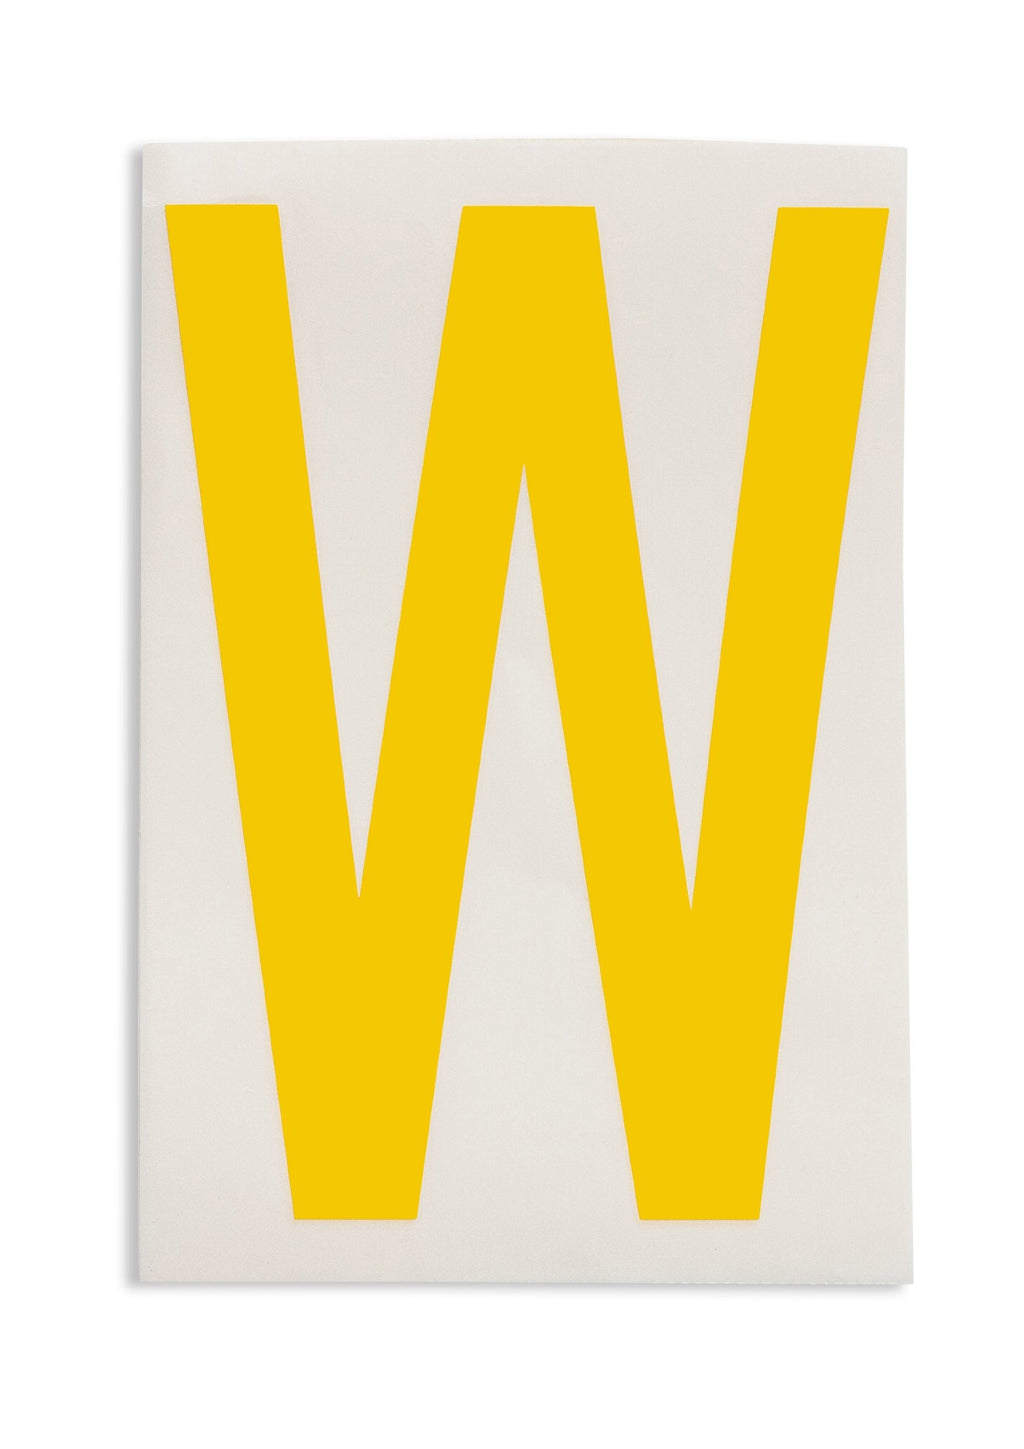  [AUSTRALIA] - Brady 121828 ToughStripe Die-Cut Polyester Tape, Yellow Letter"W"(Pack of 20)